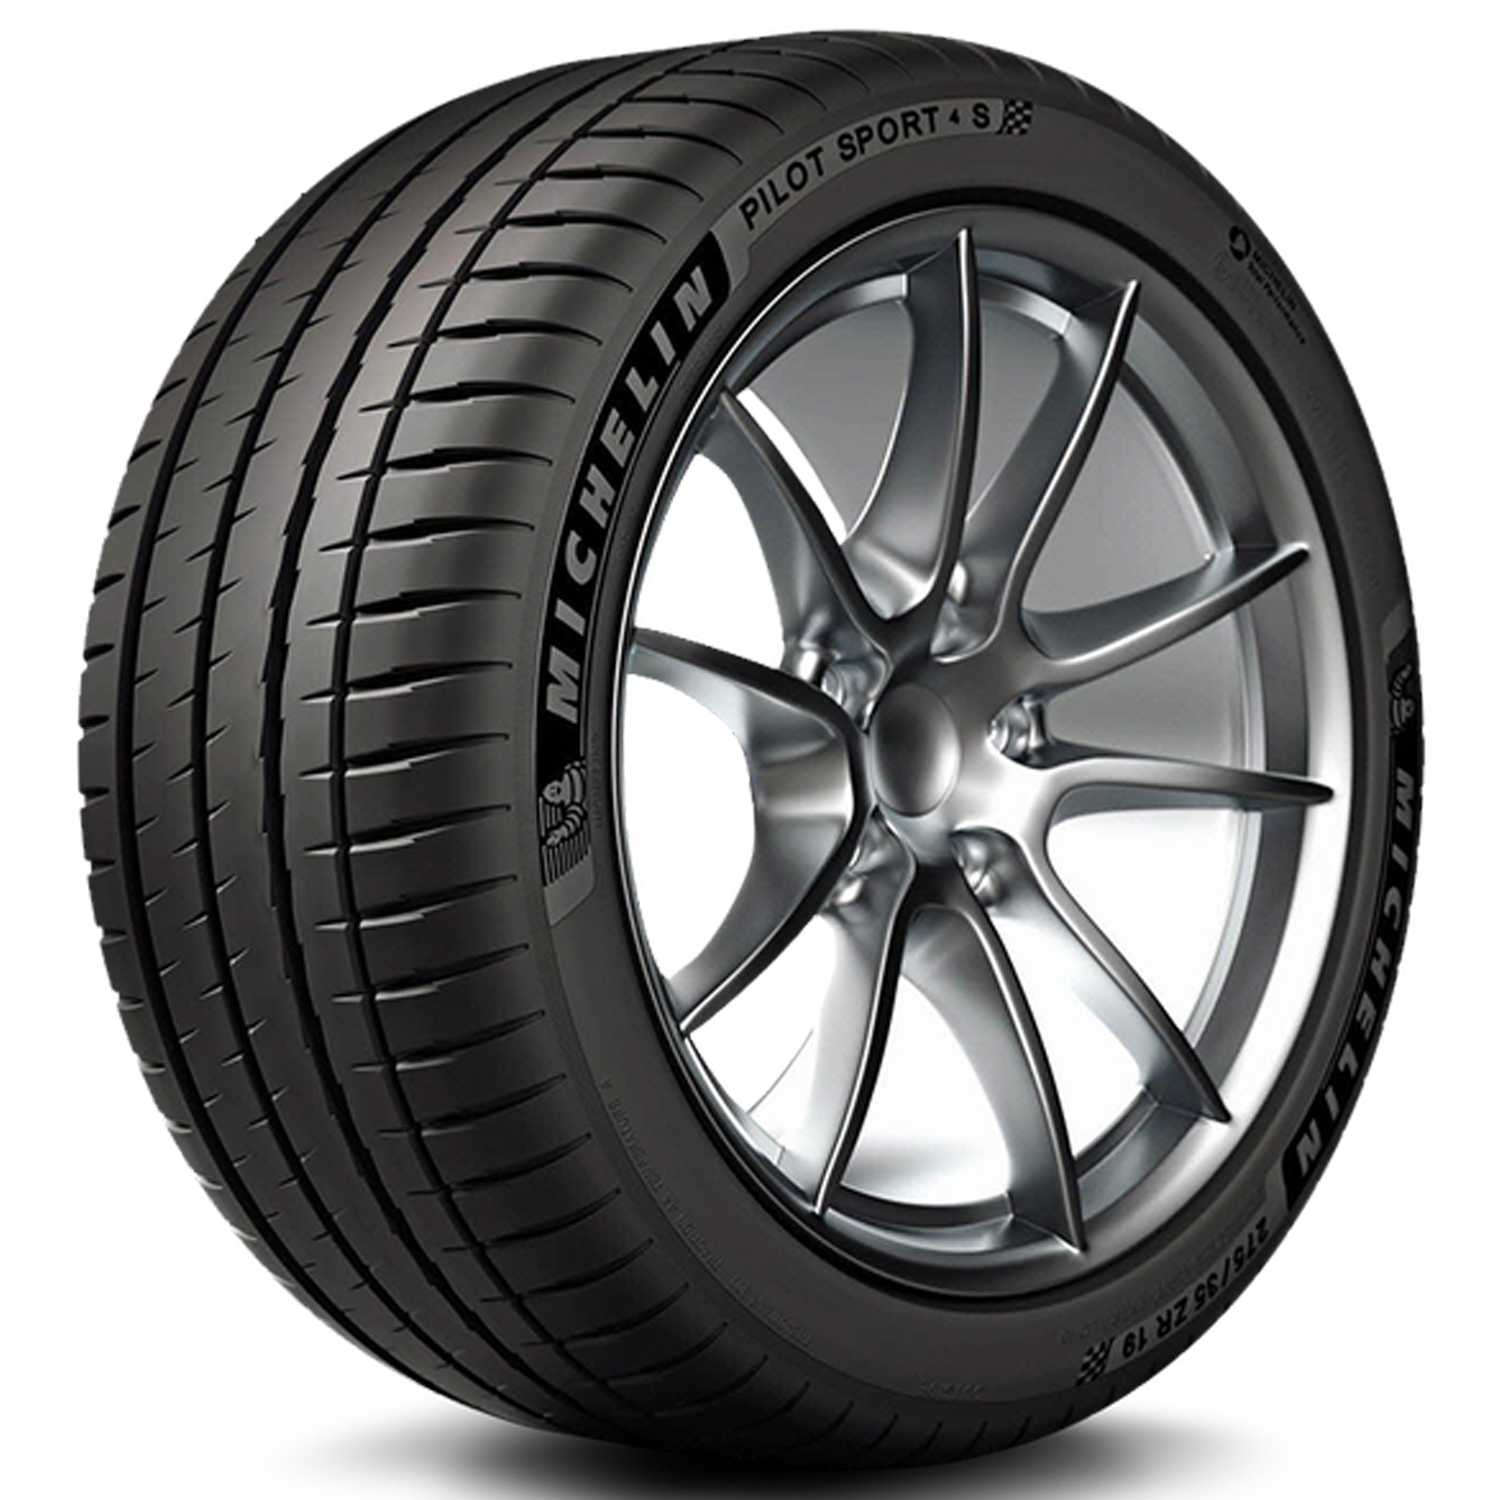 Michelin Pilot Sport 4S Performance 255/35ZR18 (94Y) XL Passenger Tire - image 1 of 5